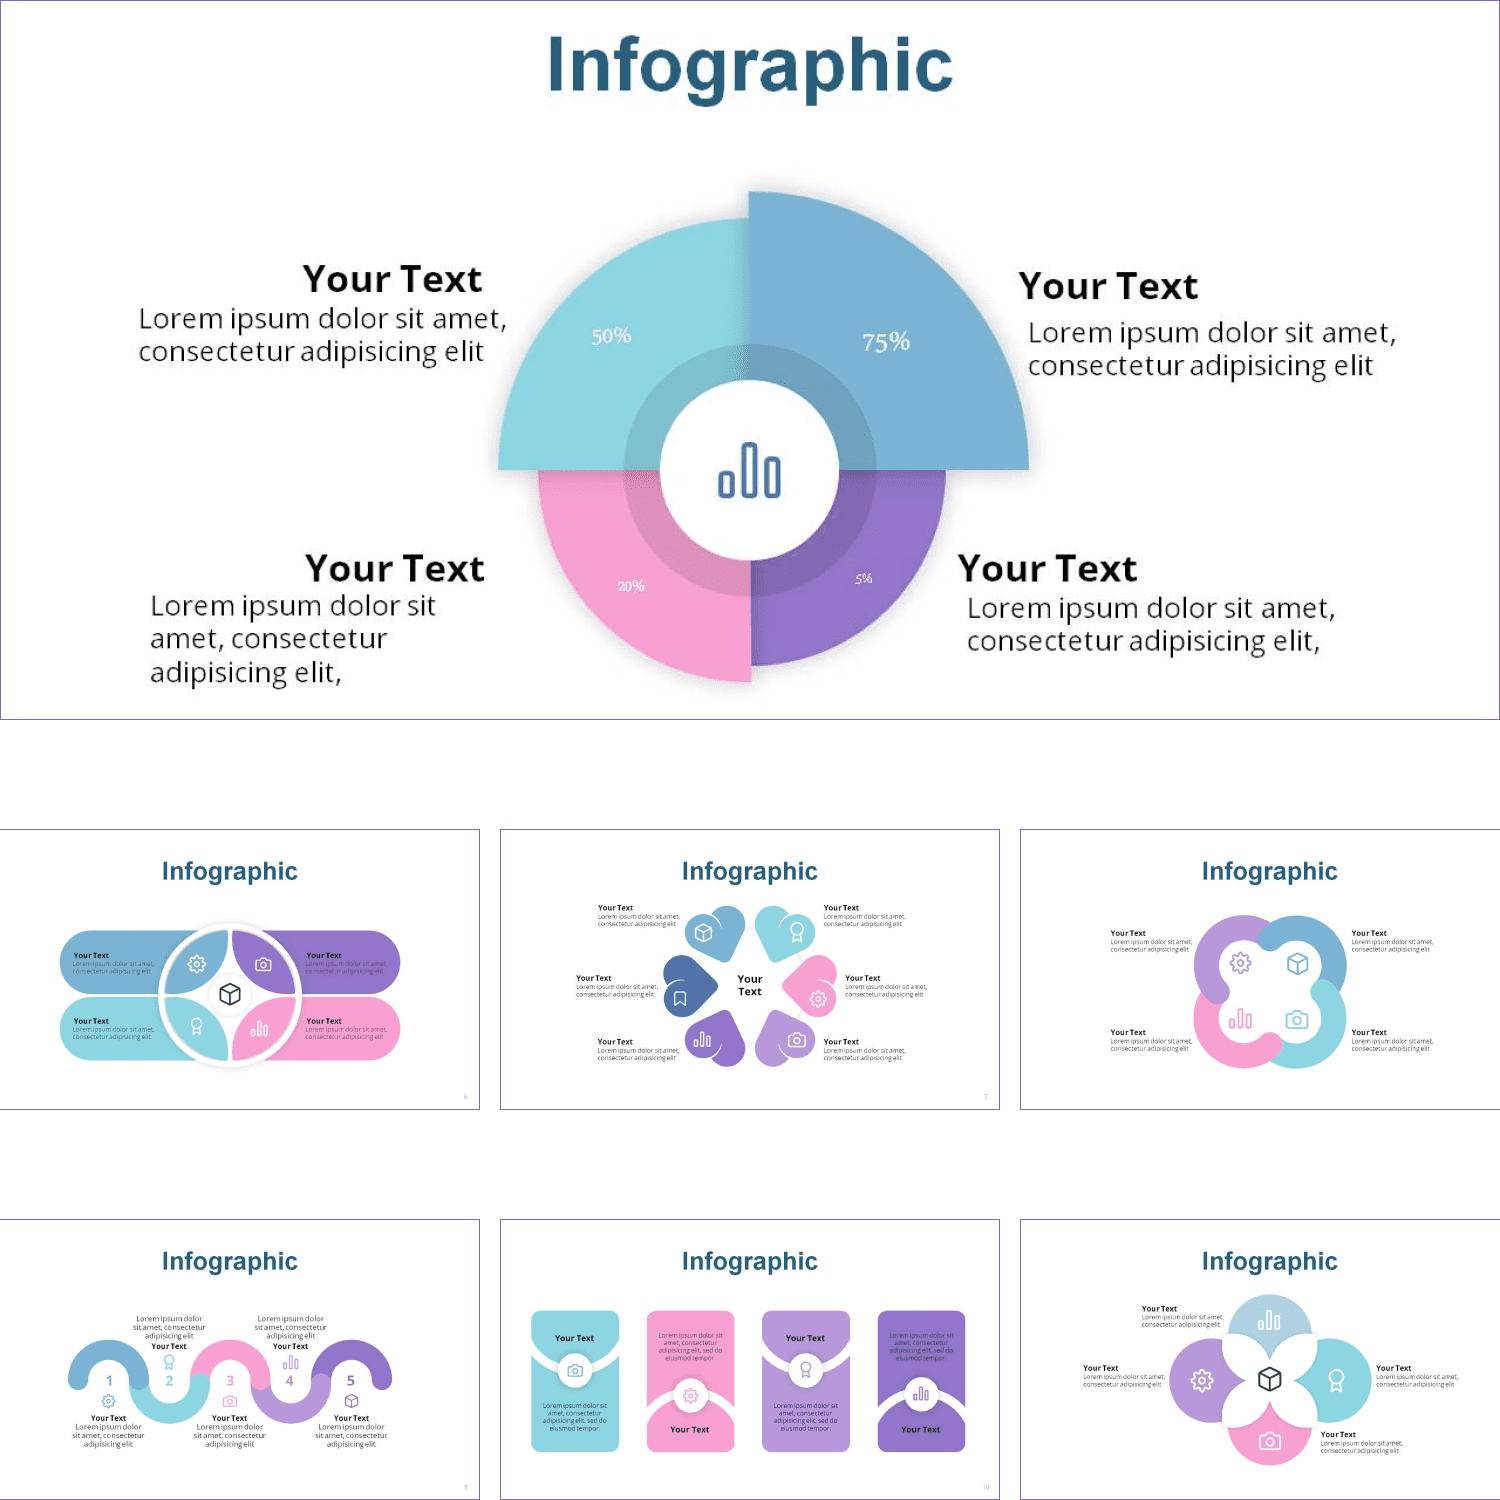 Infographic Powerpoint Presentation by MasterBundles.